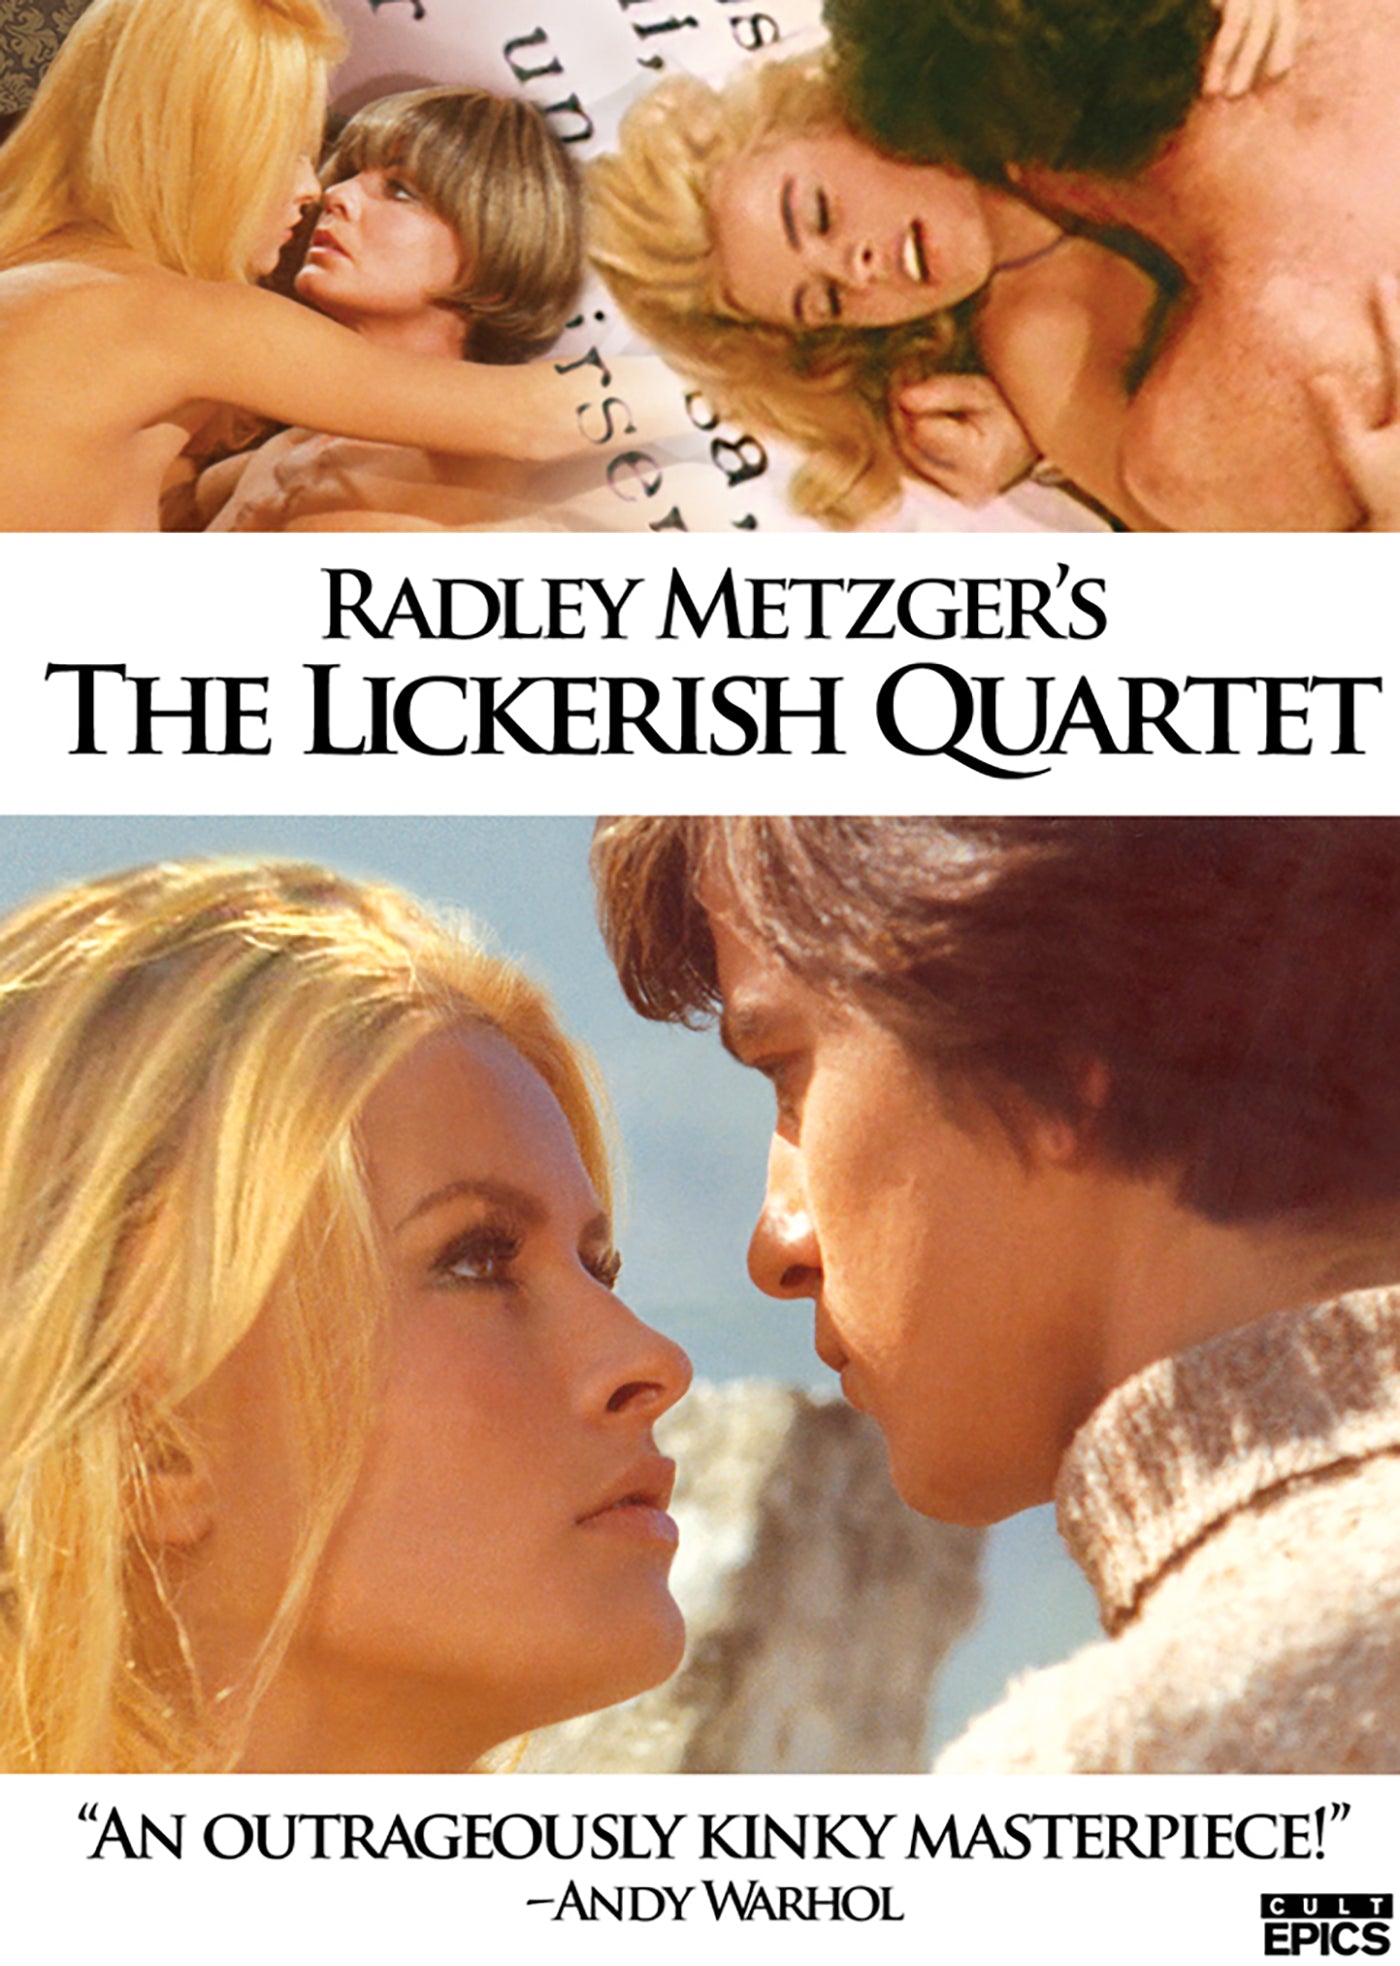 THE LICKERISH QUARTET DVD